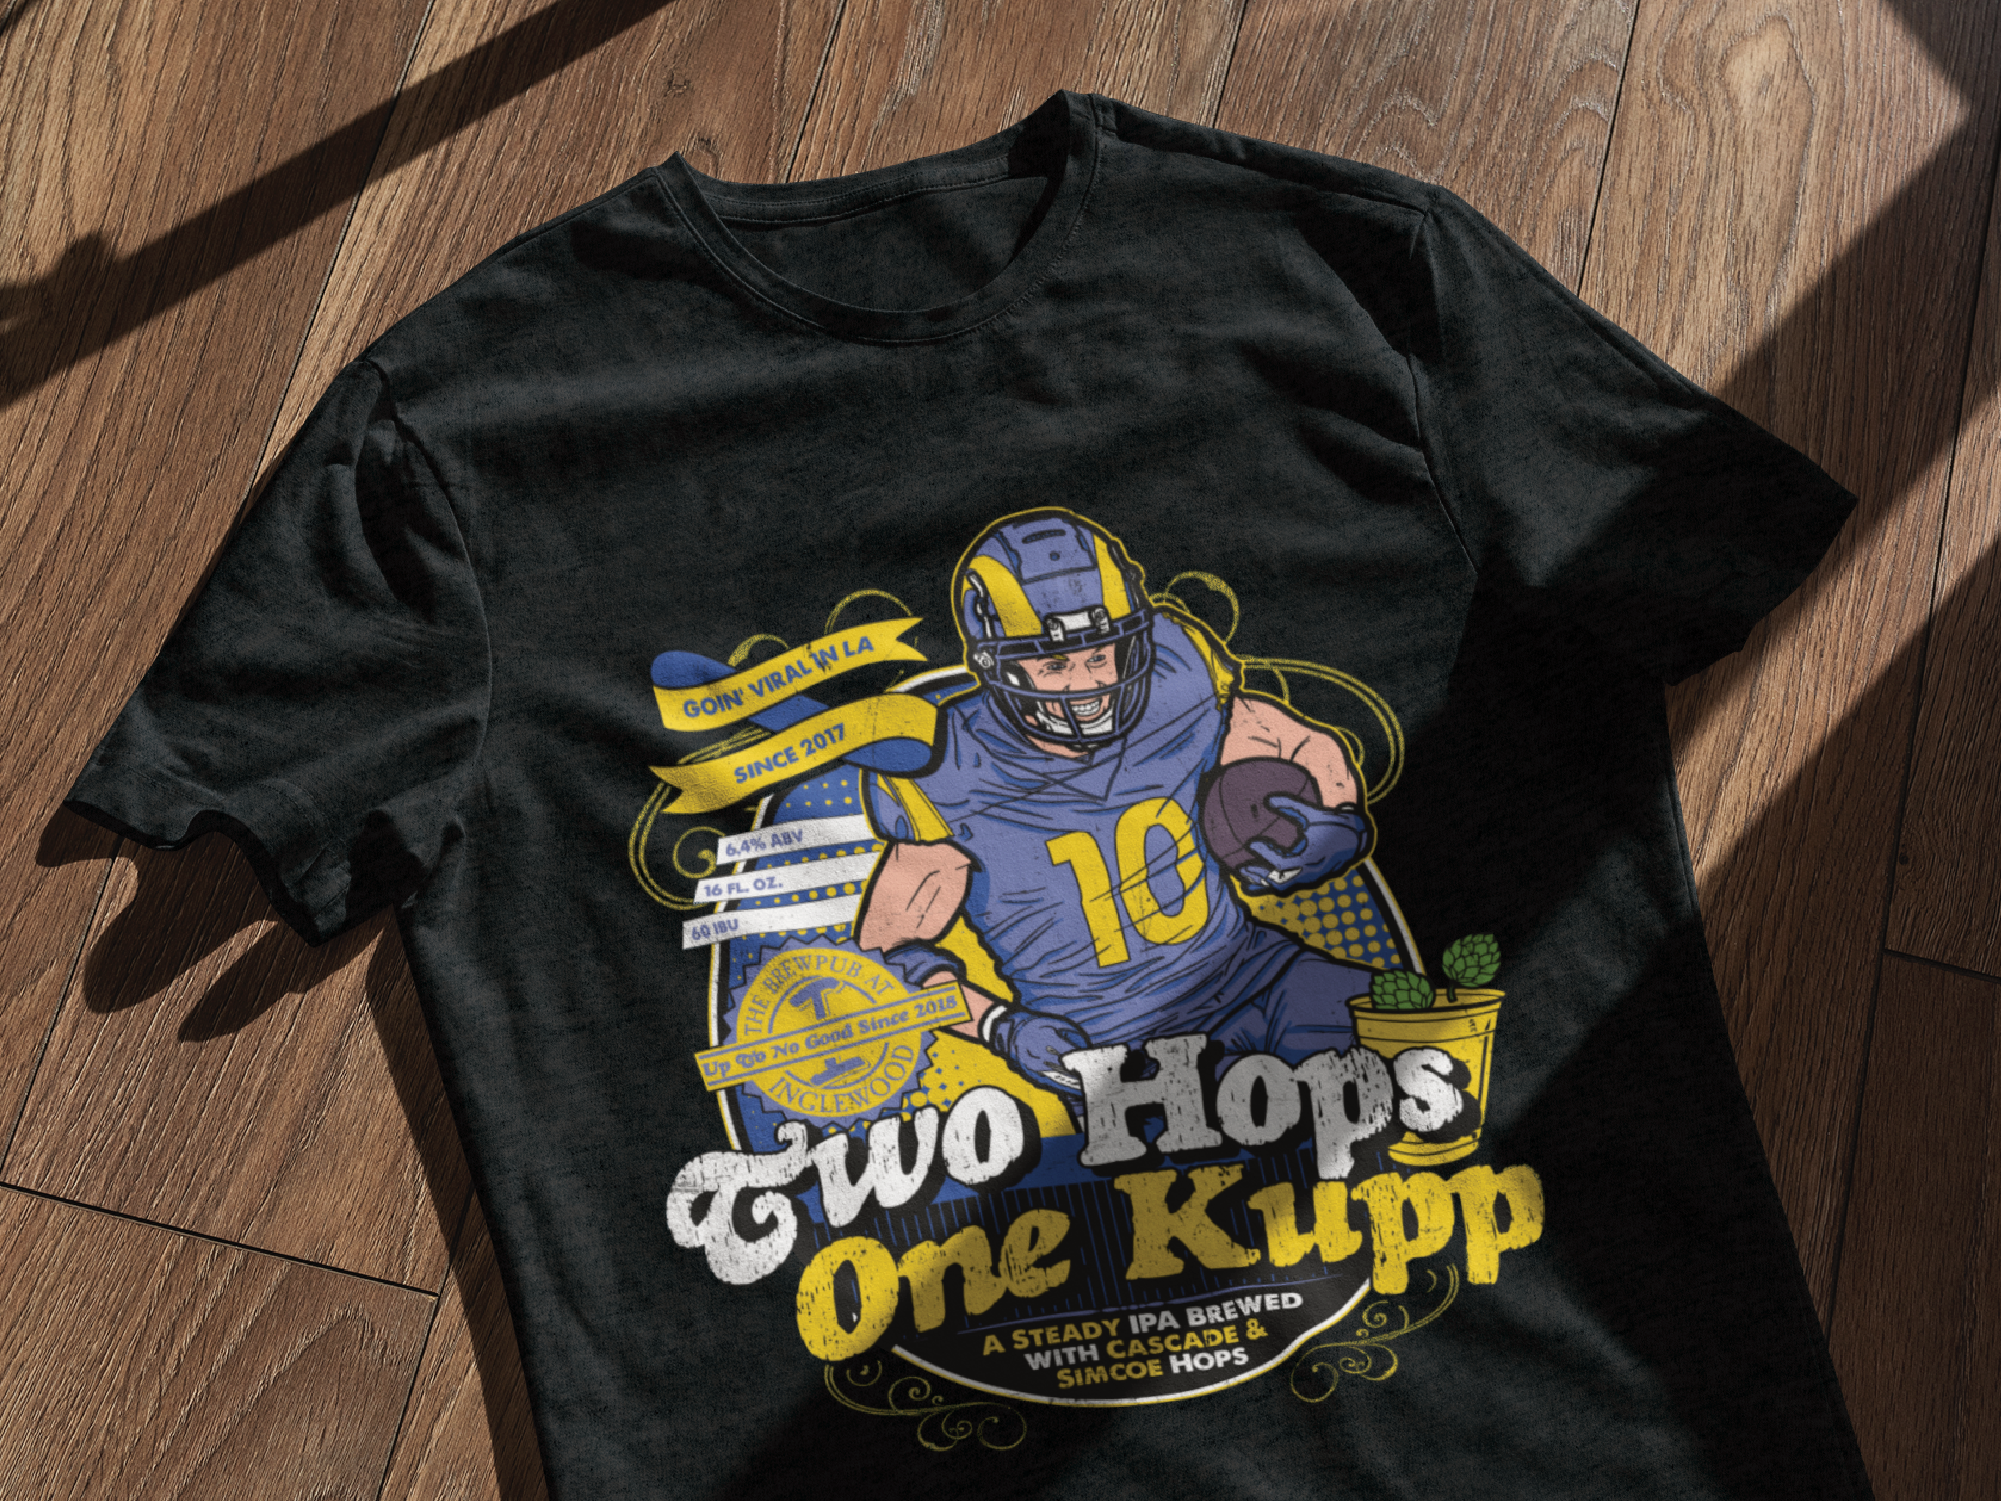 Cooper Kupp (Rams) Fake Craft Beer Label T-Shirt — Dustin Morrison Art